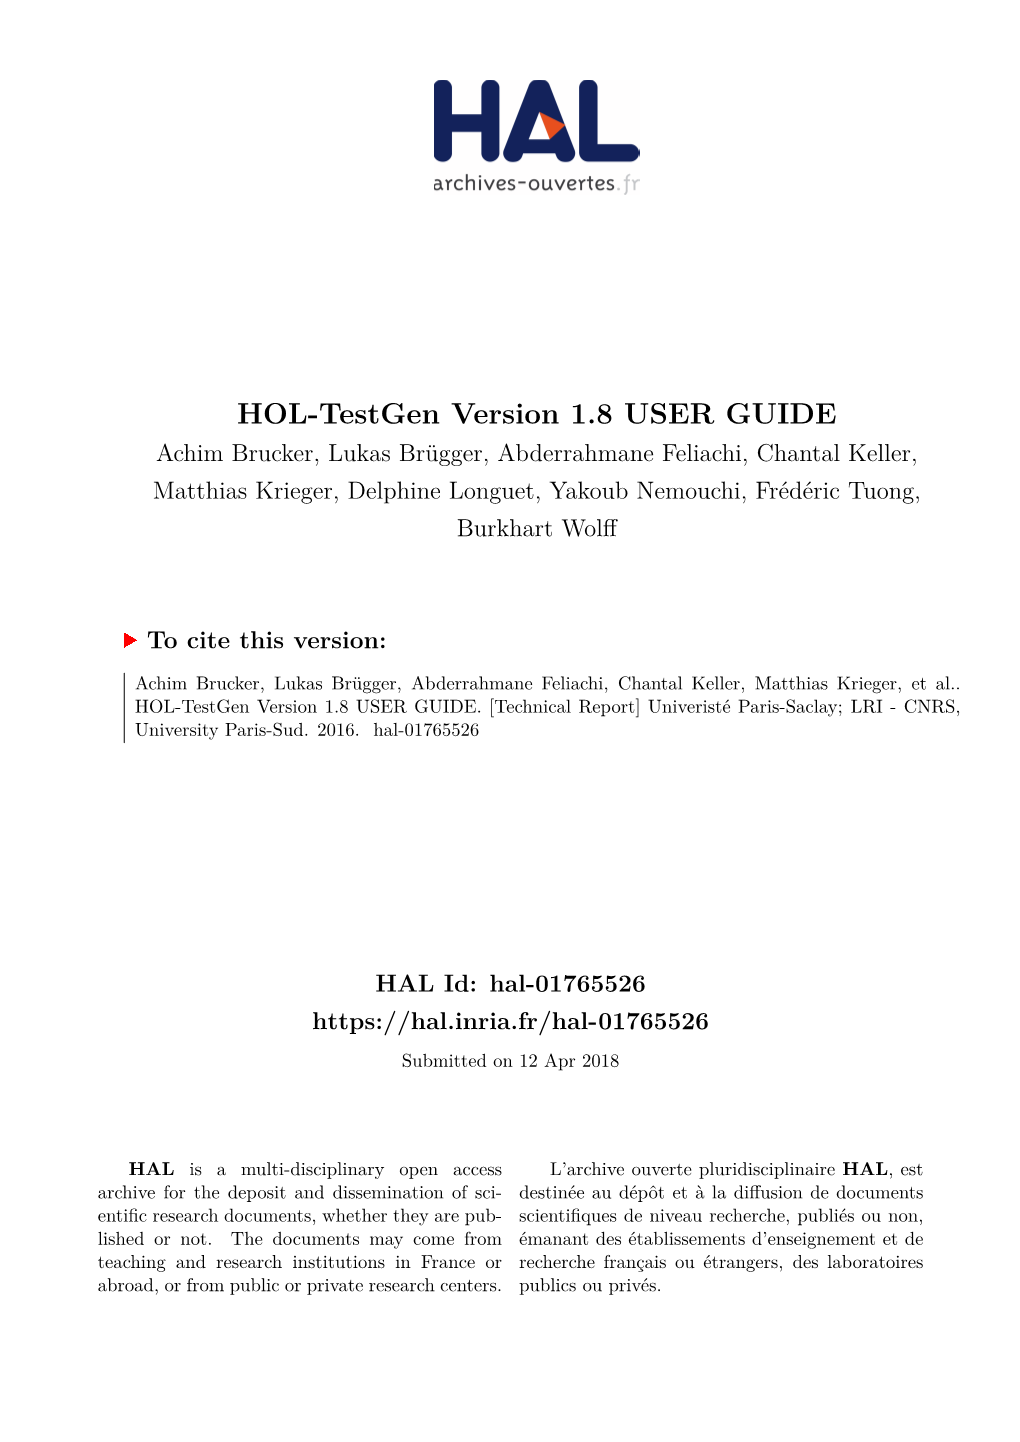 HOL-Testgen Version 1.8 USER GUIDE